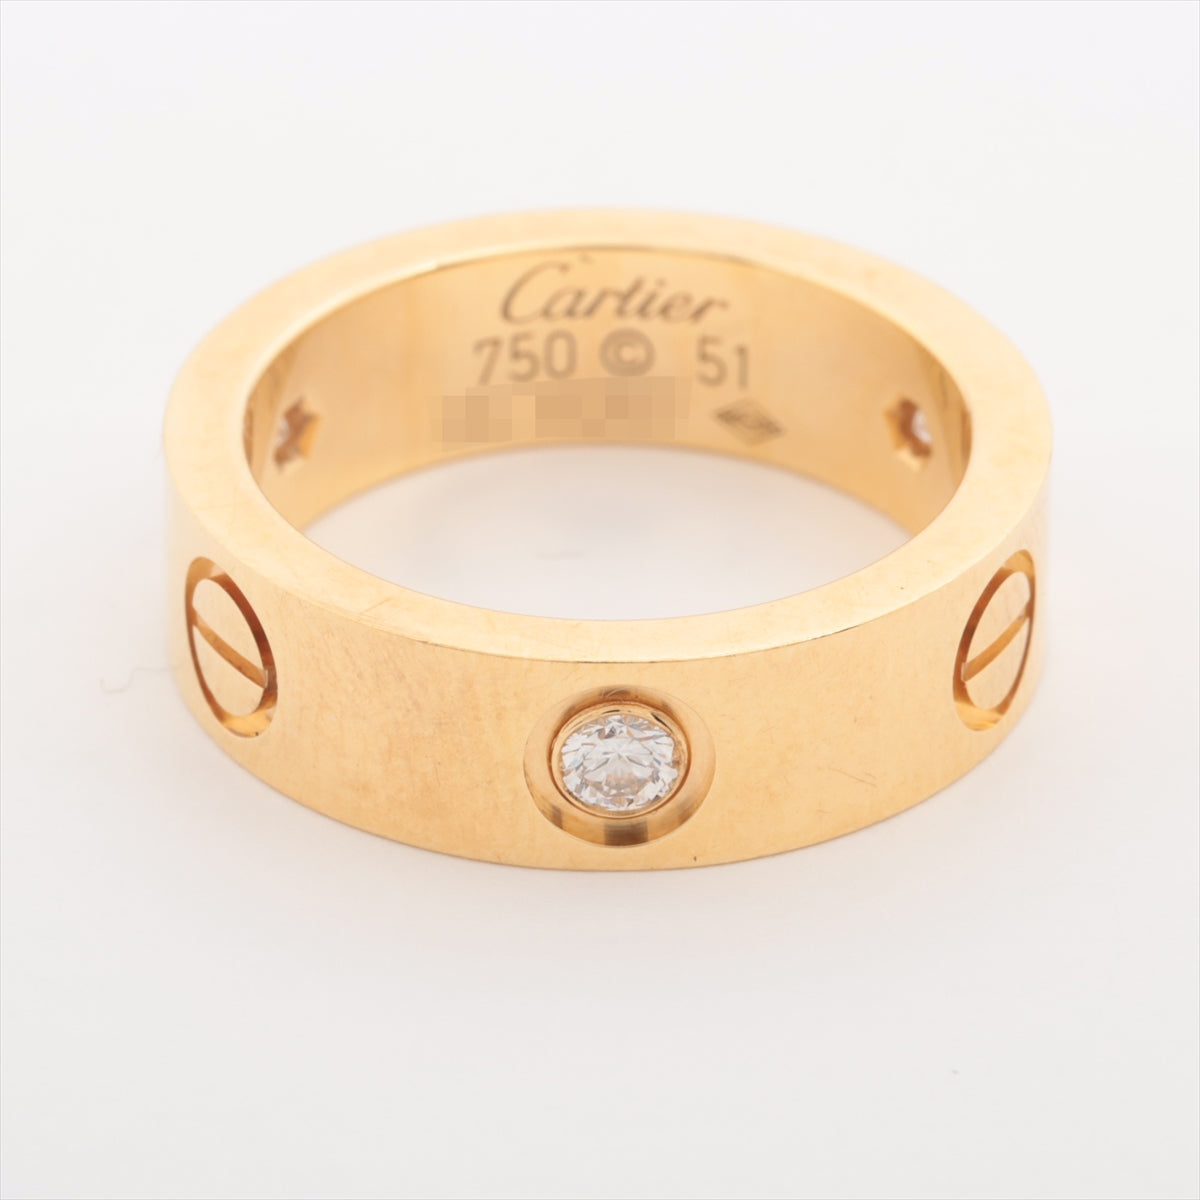 Cartier  Half Diamond Ring 750 (YG) 8.6g 51 B4032451